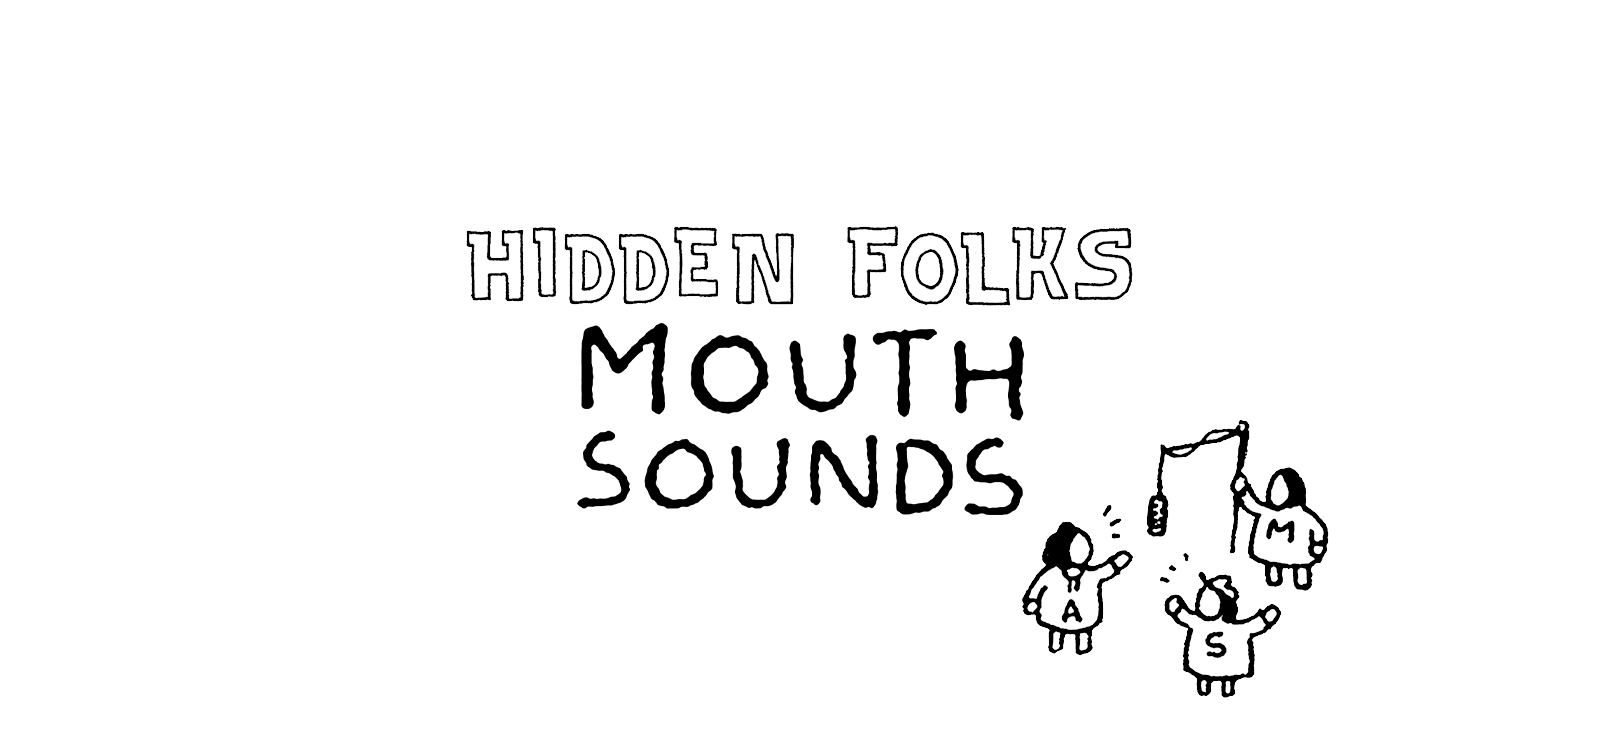 Hidden Folks - Mouth Sounds Pack